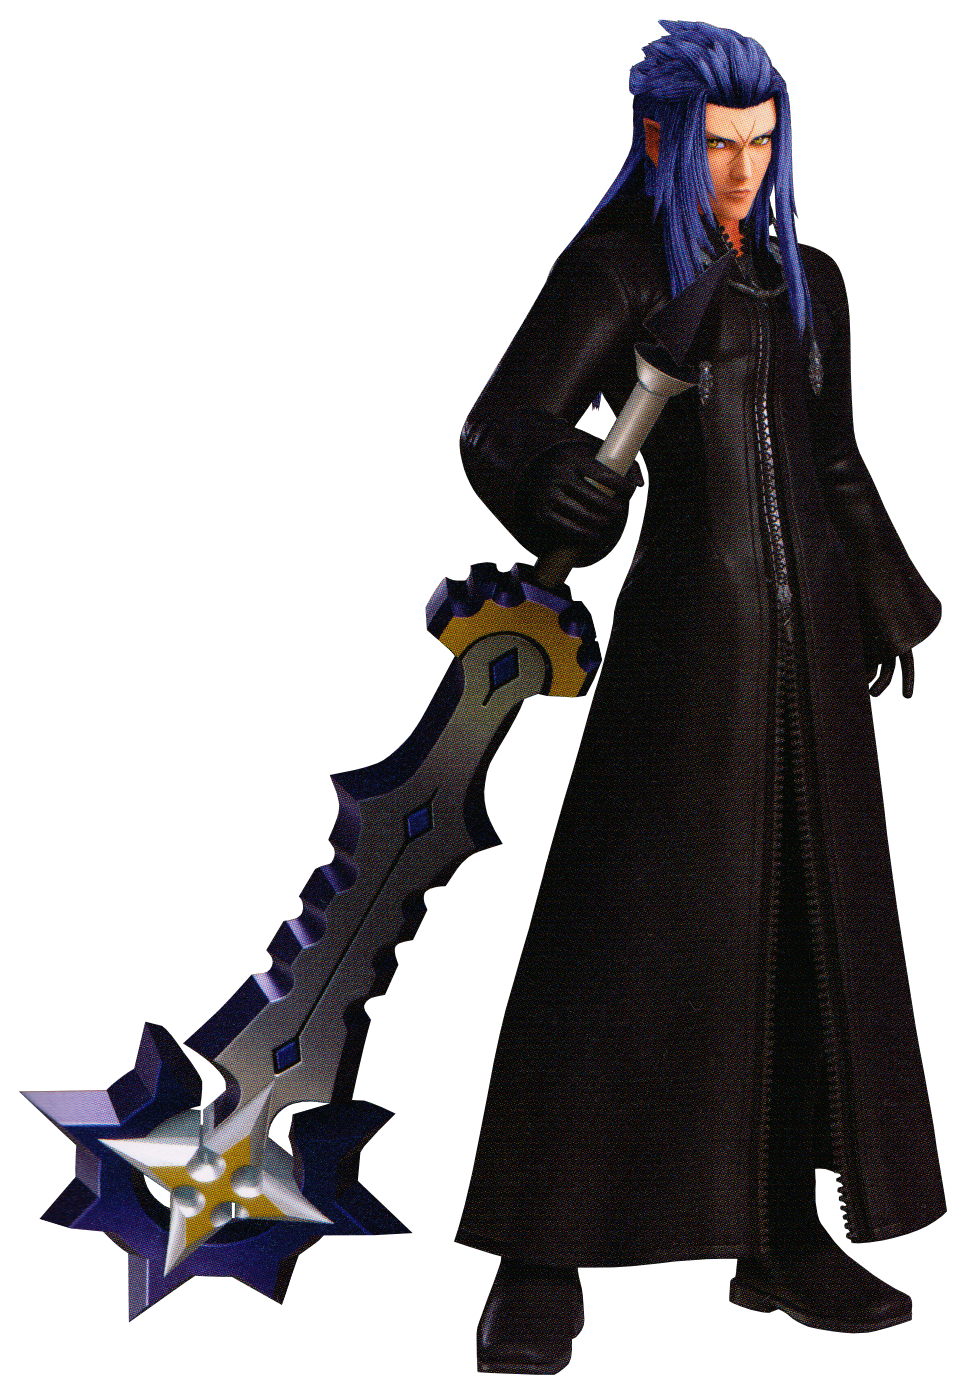 Saix Kingdom Hearts Wiki The Kingdom Hearts Encyclopedia